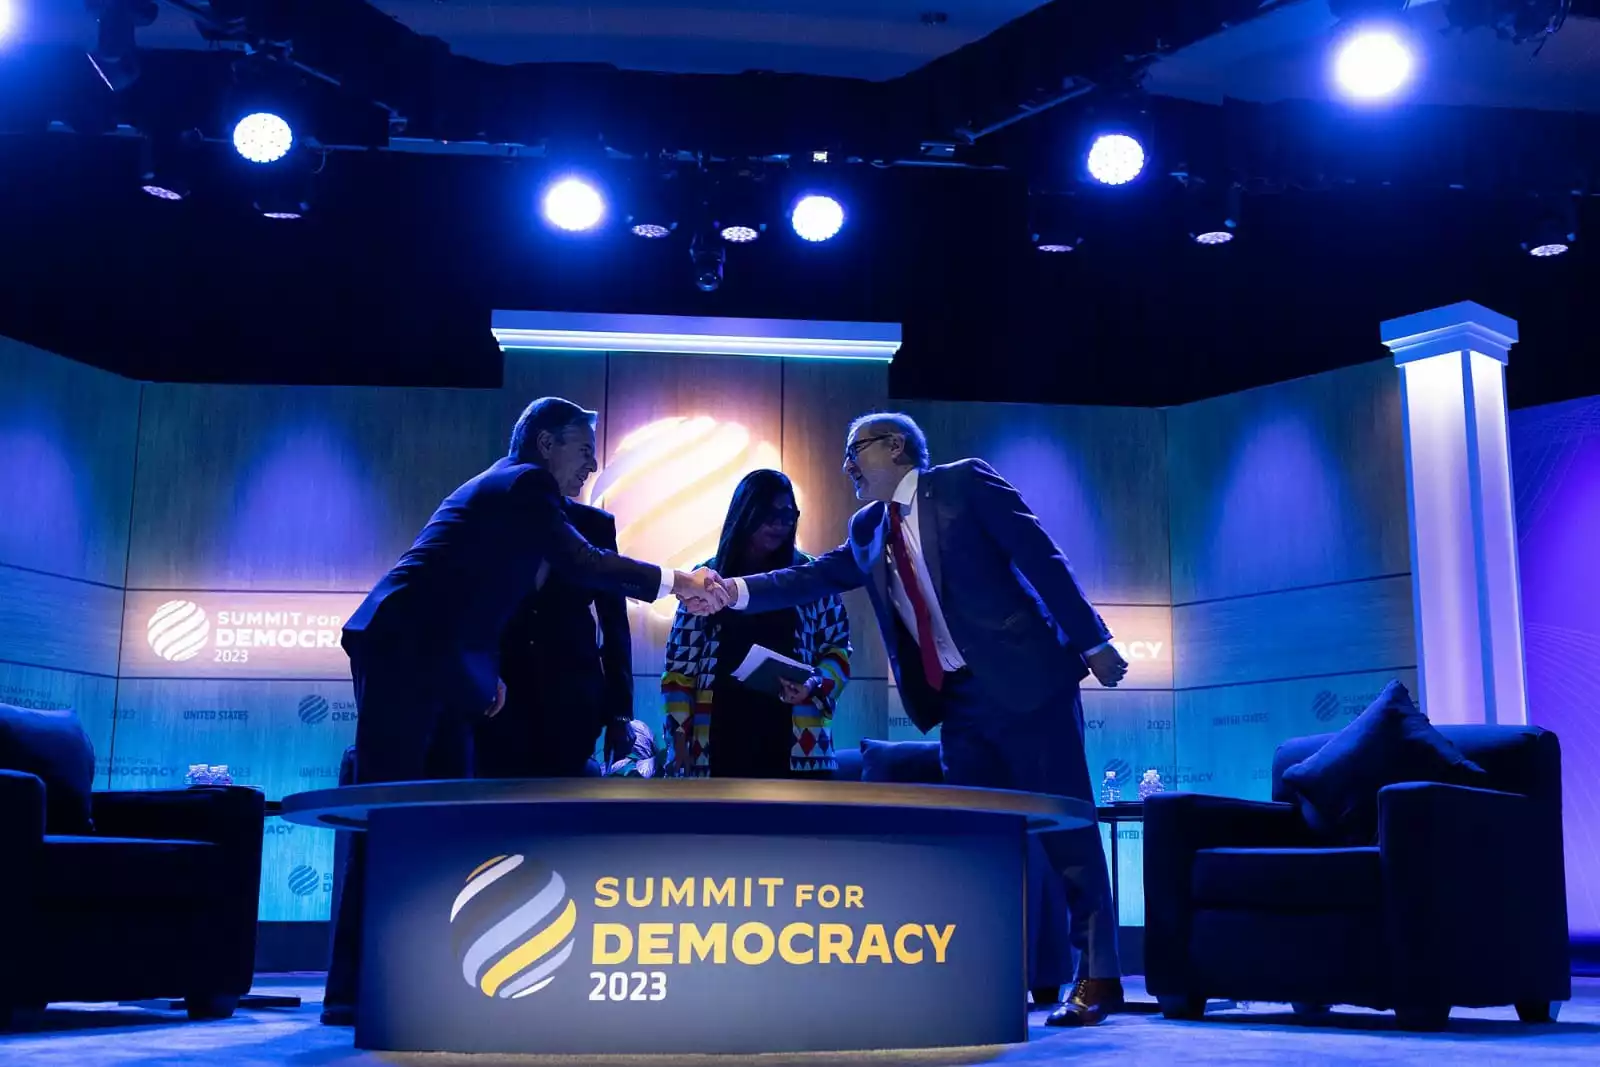 Democracy Summit 2023